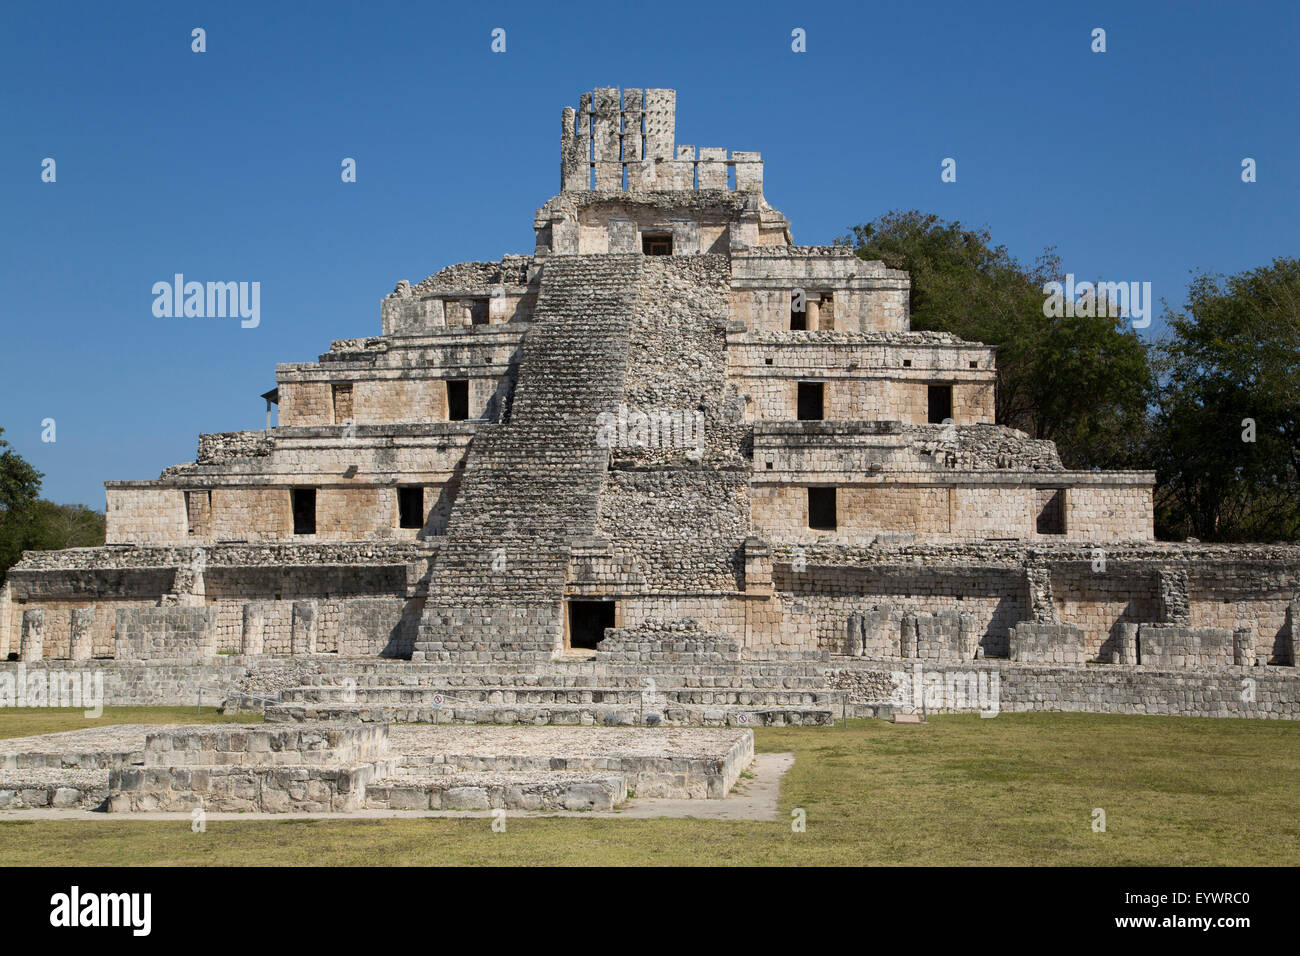 Estructura de cinco pisos (pisos), Edzná, sitio arqueológico maya, Campeche, México, América del Norte Foto de stock